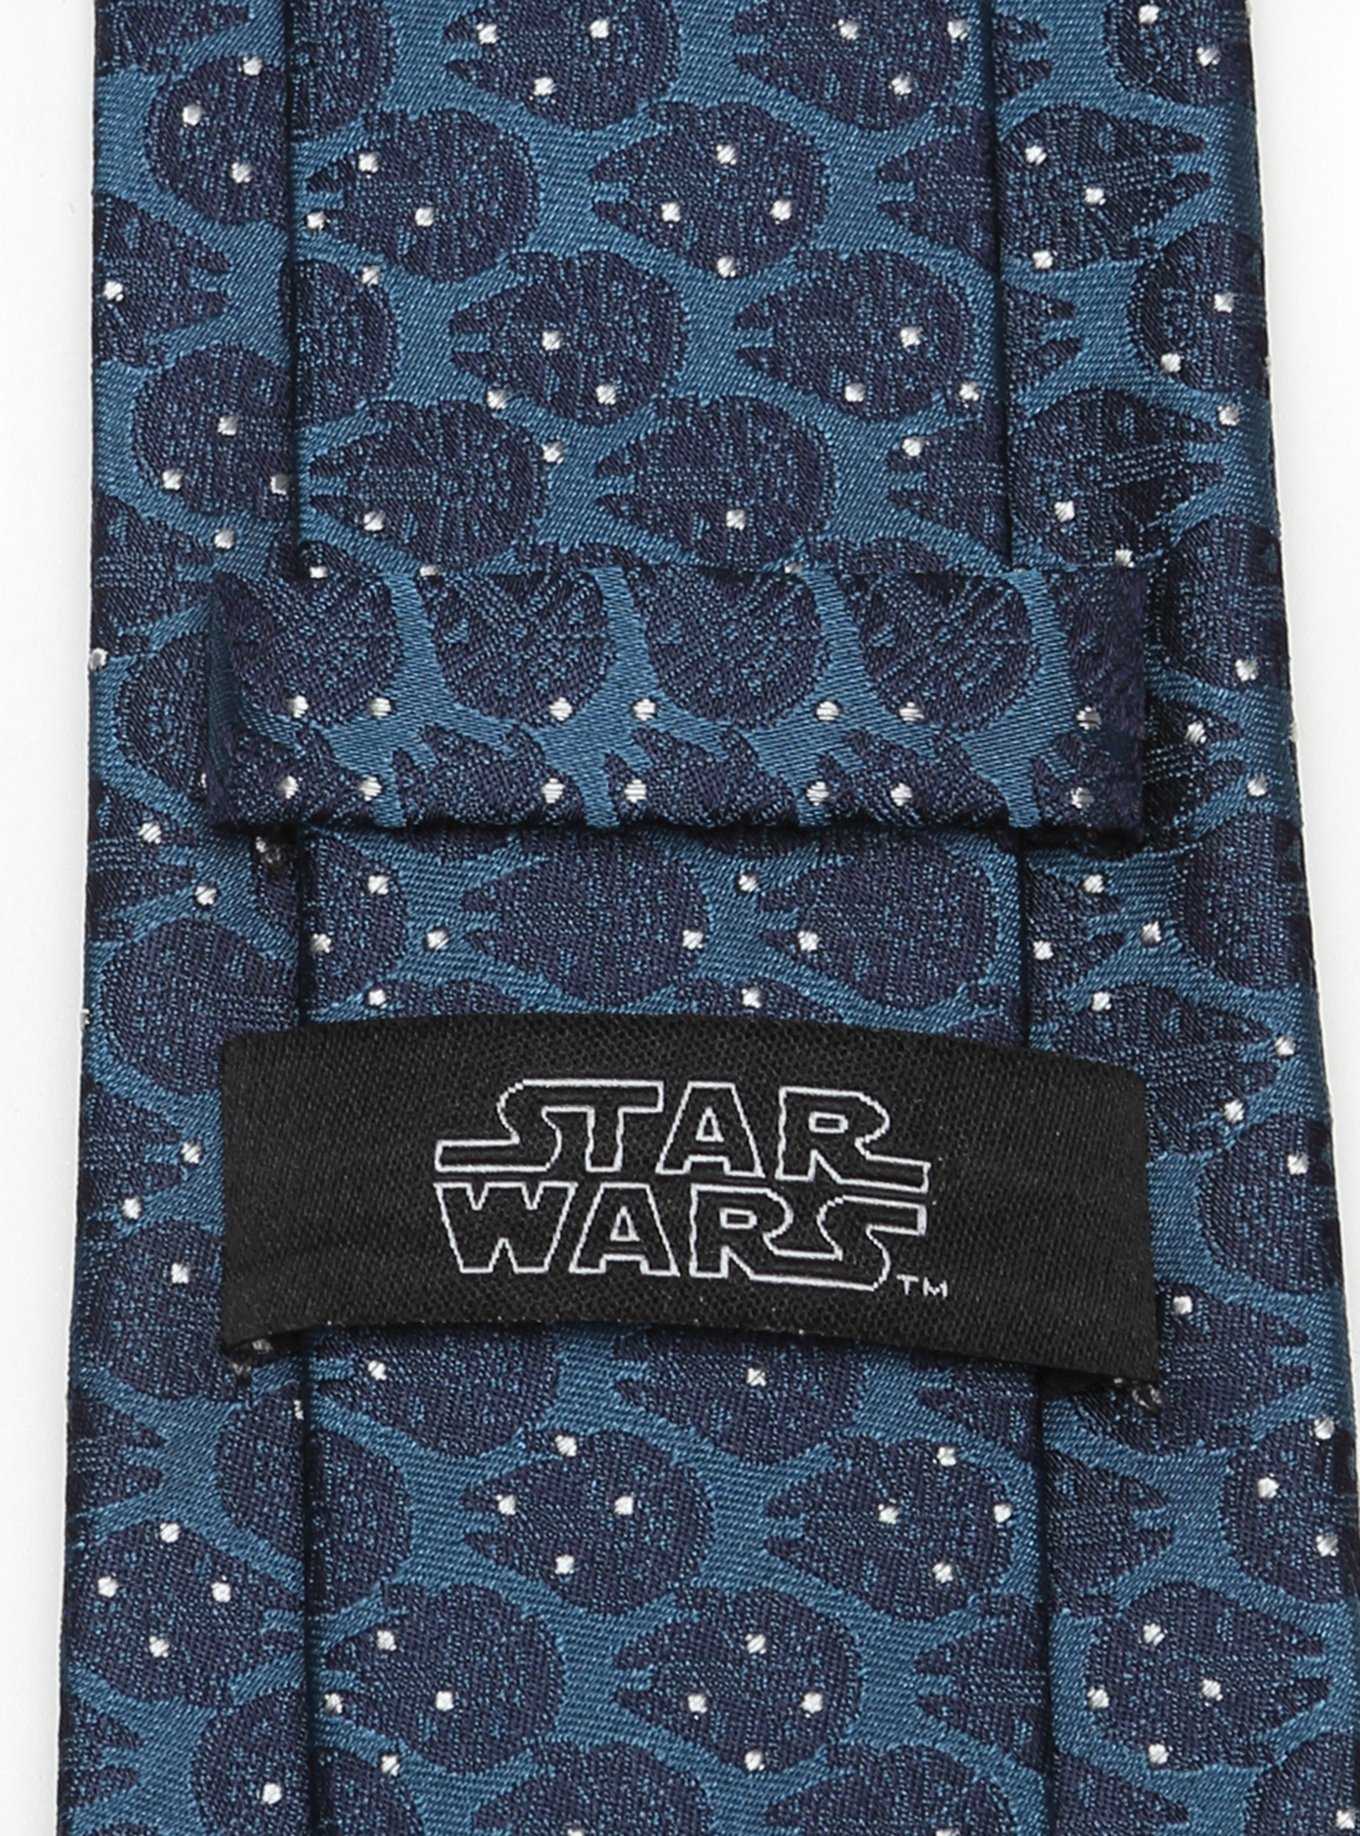 Star Wars Millennium Falcon Dot Blue Tie, , hi-res